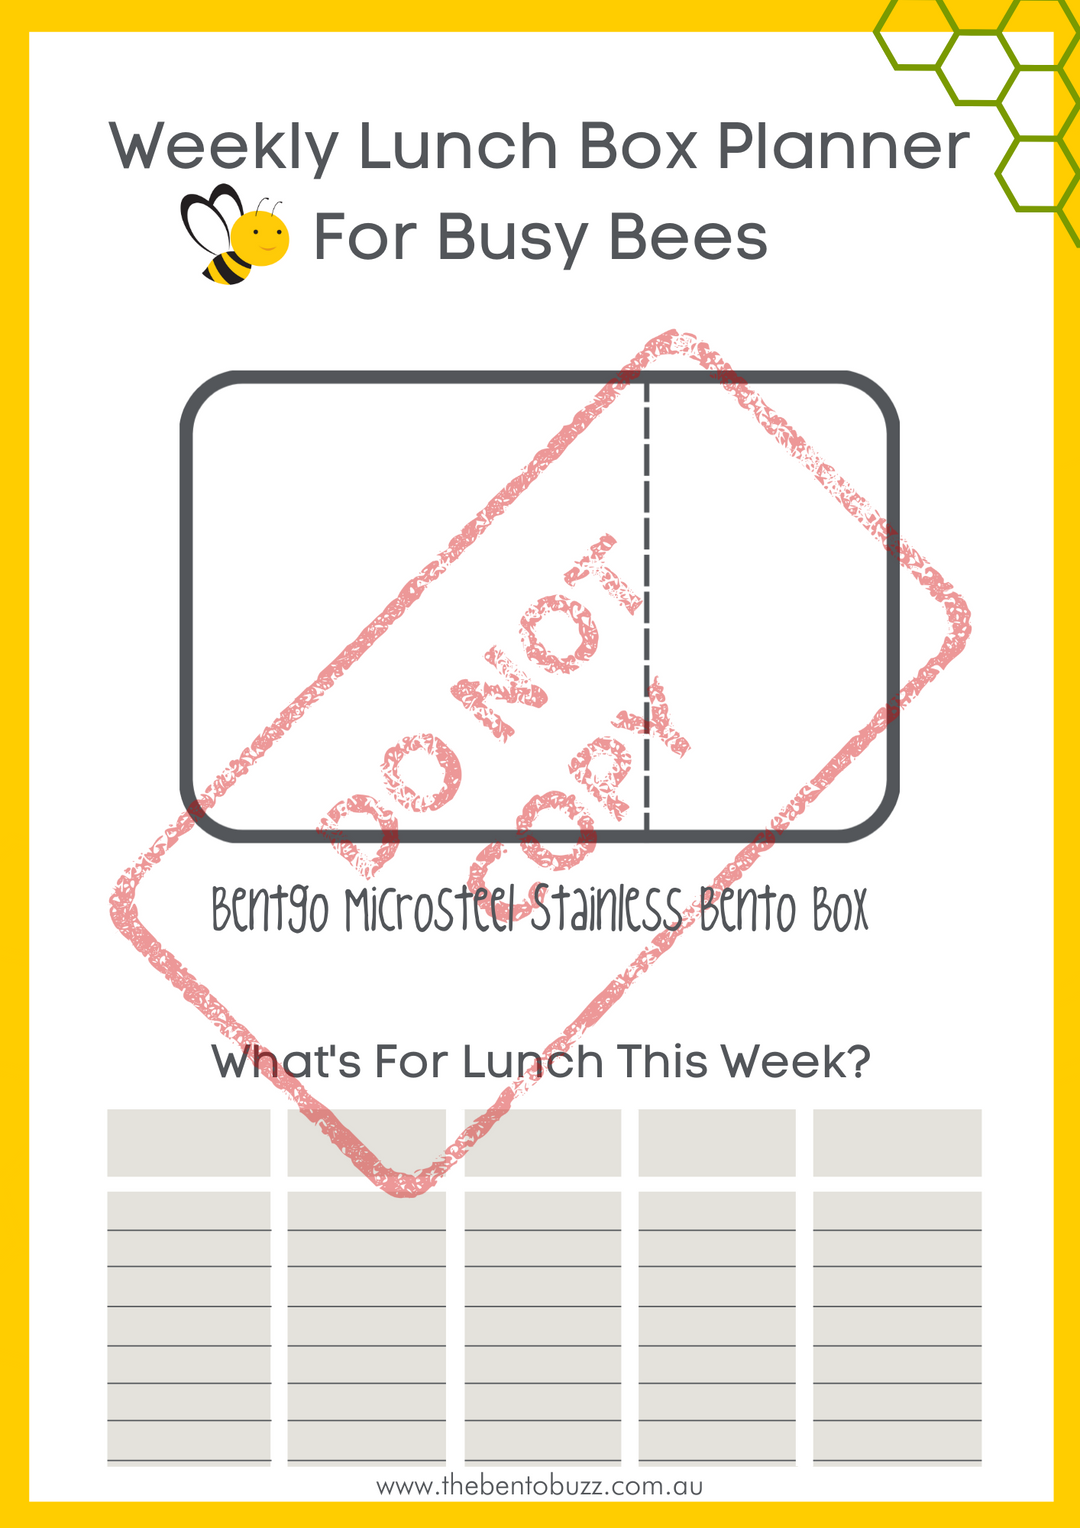 Download & Print Lunch Box Planner - Bentgo Microsteel